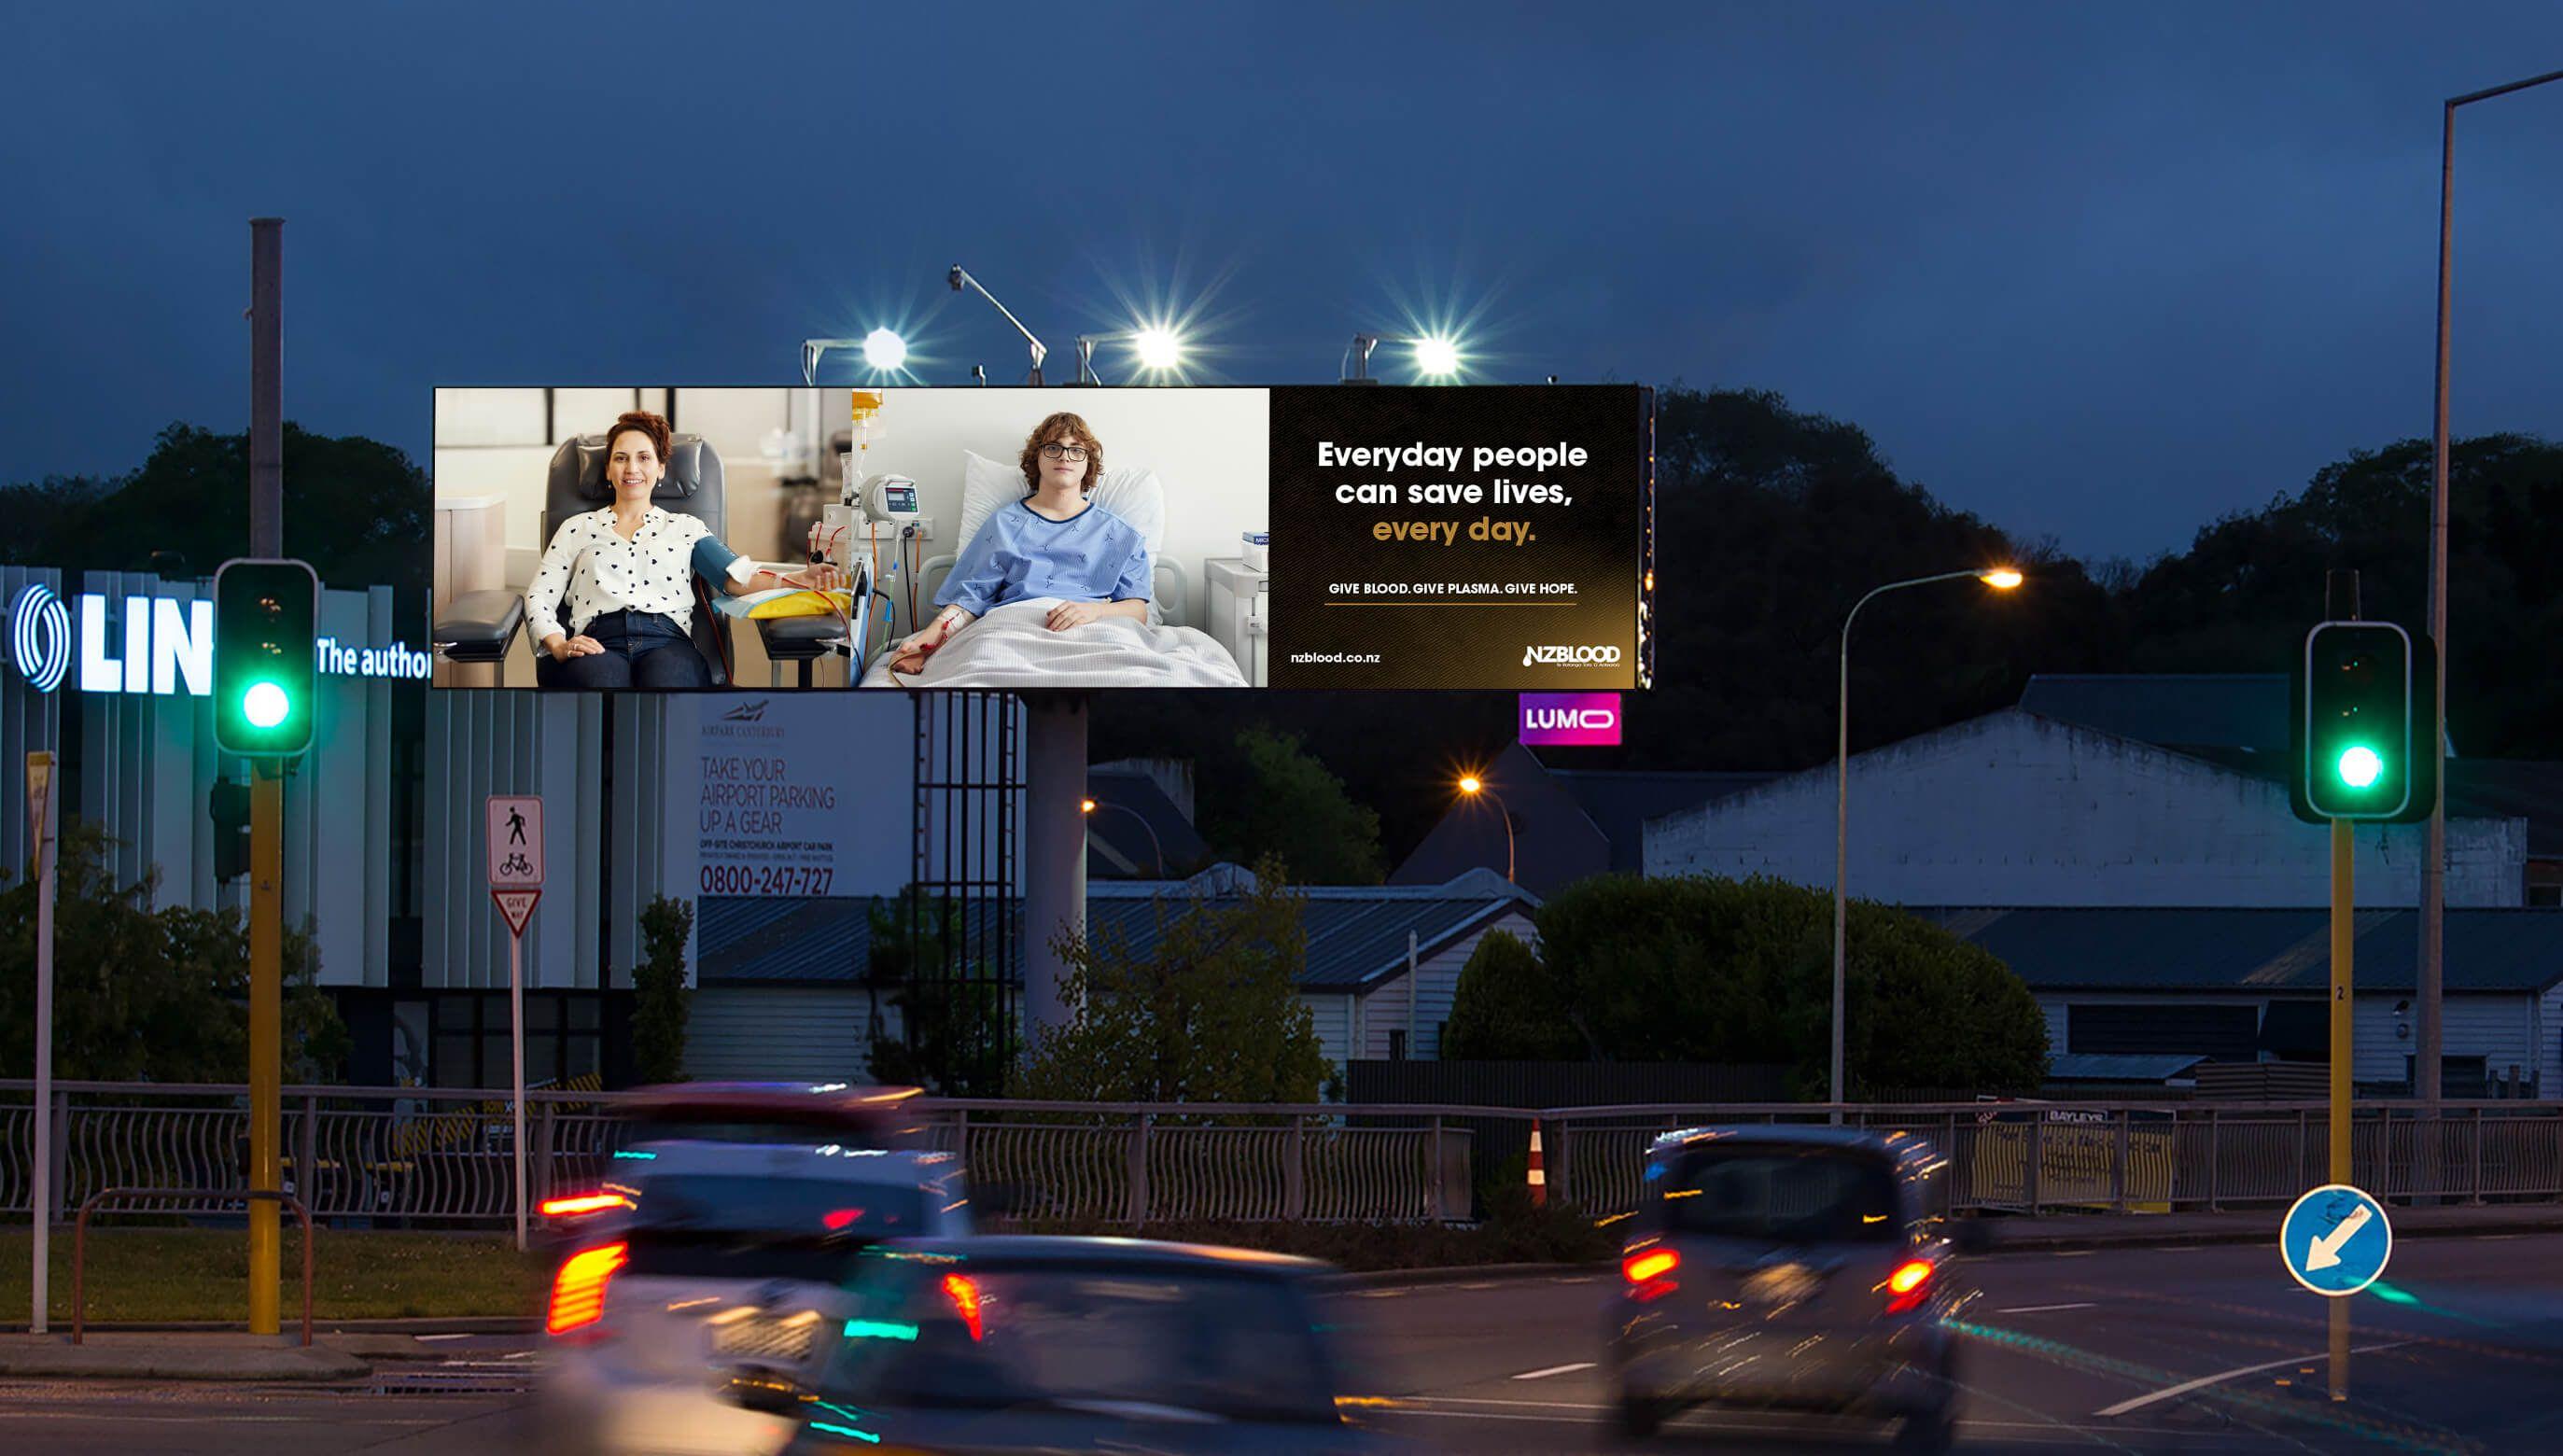 An NZblood advertisement taken above the motorway.